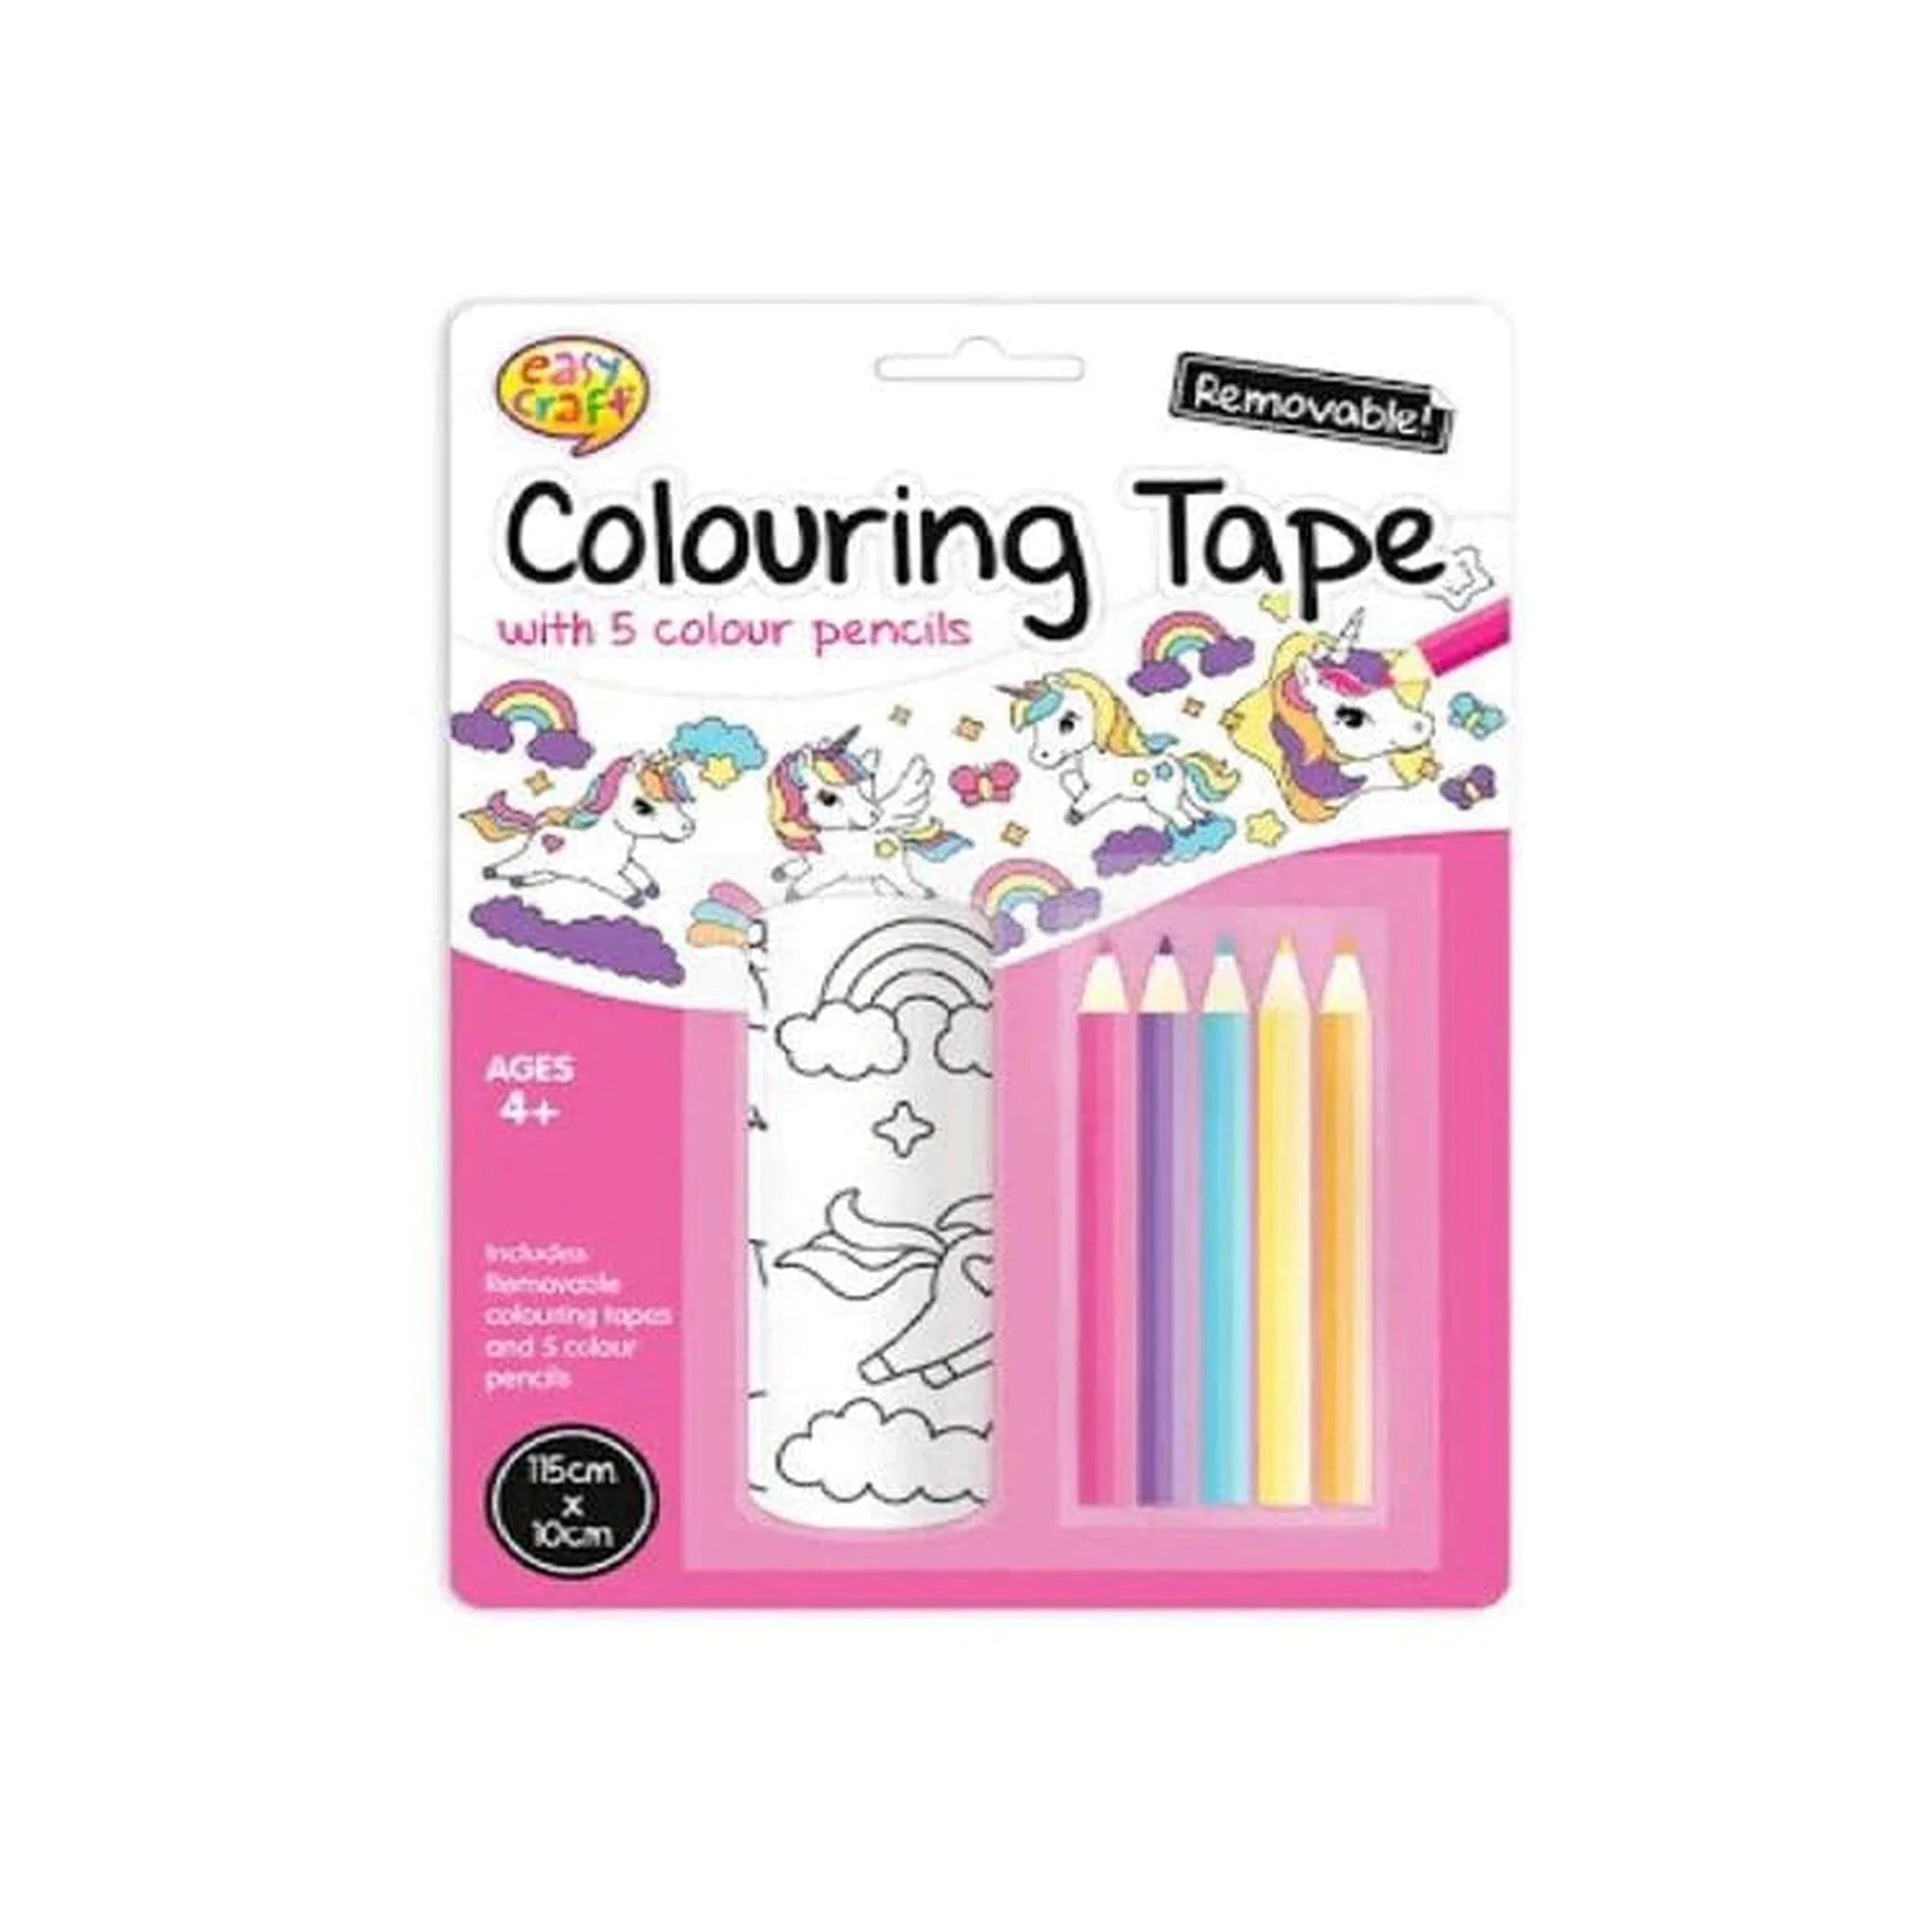 Unicorn Colouring Tape Set - Kids Party Craft